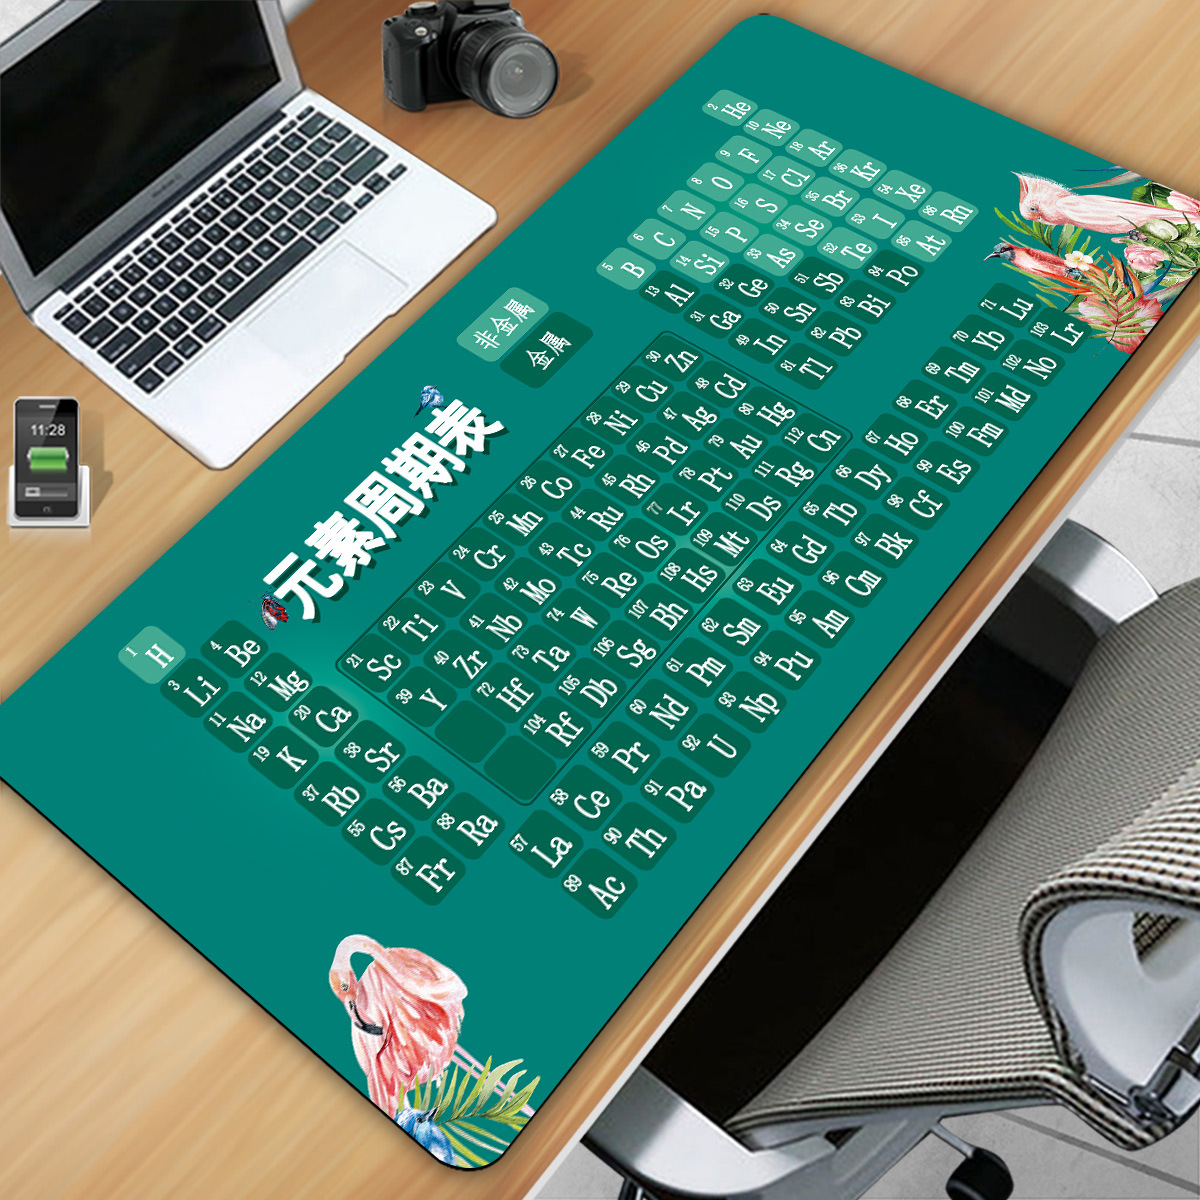 custom mouse pad personalized desk mat large photo image print